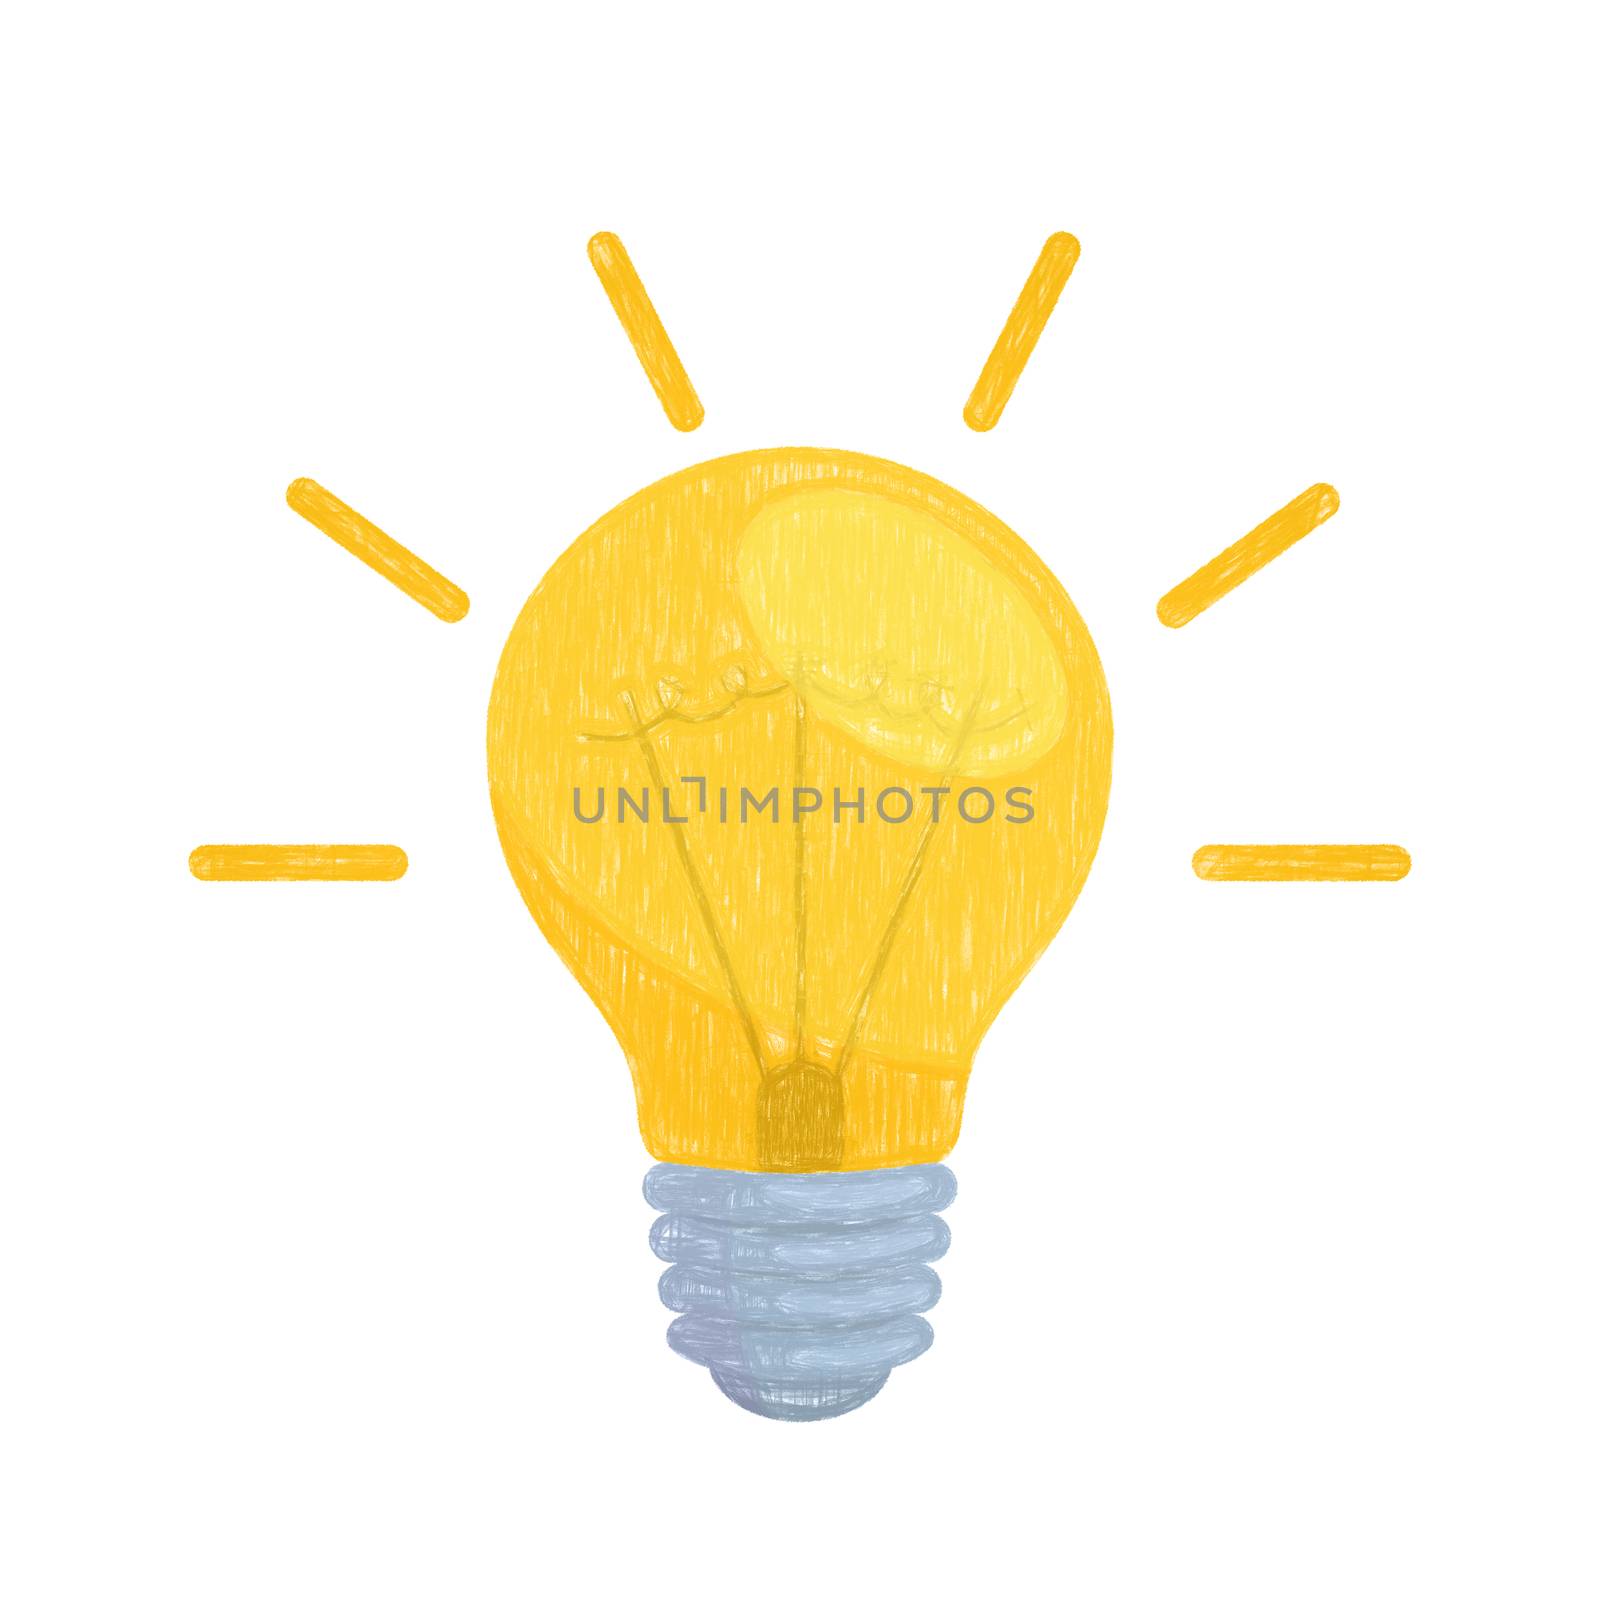 Electric lamp. Energy and idea symbol illustration